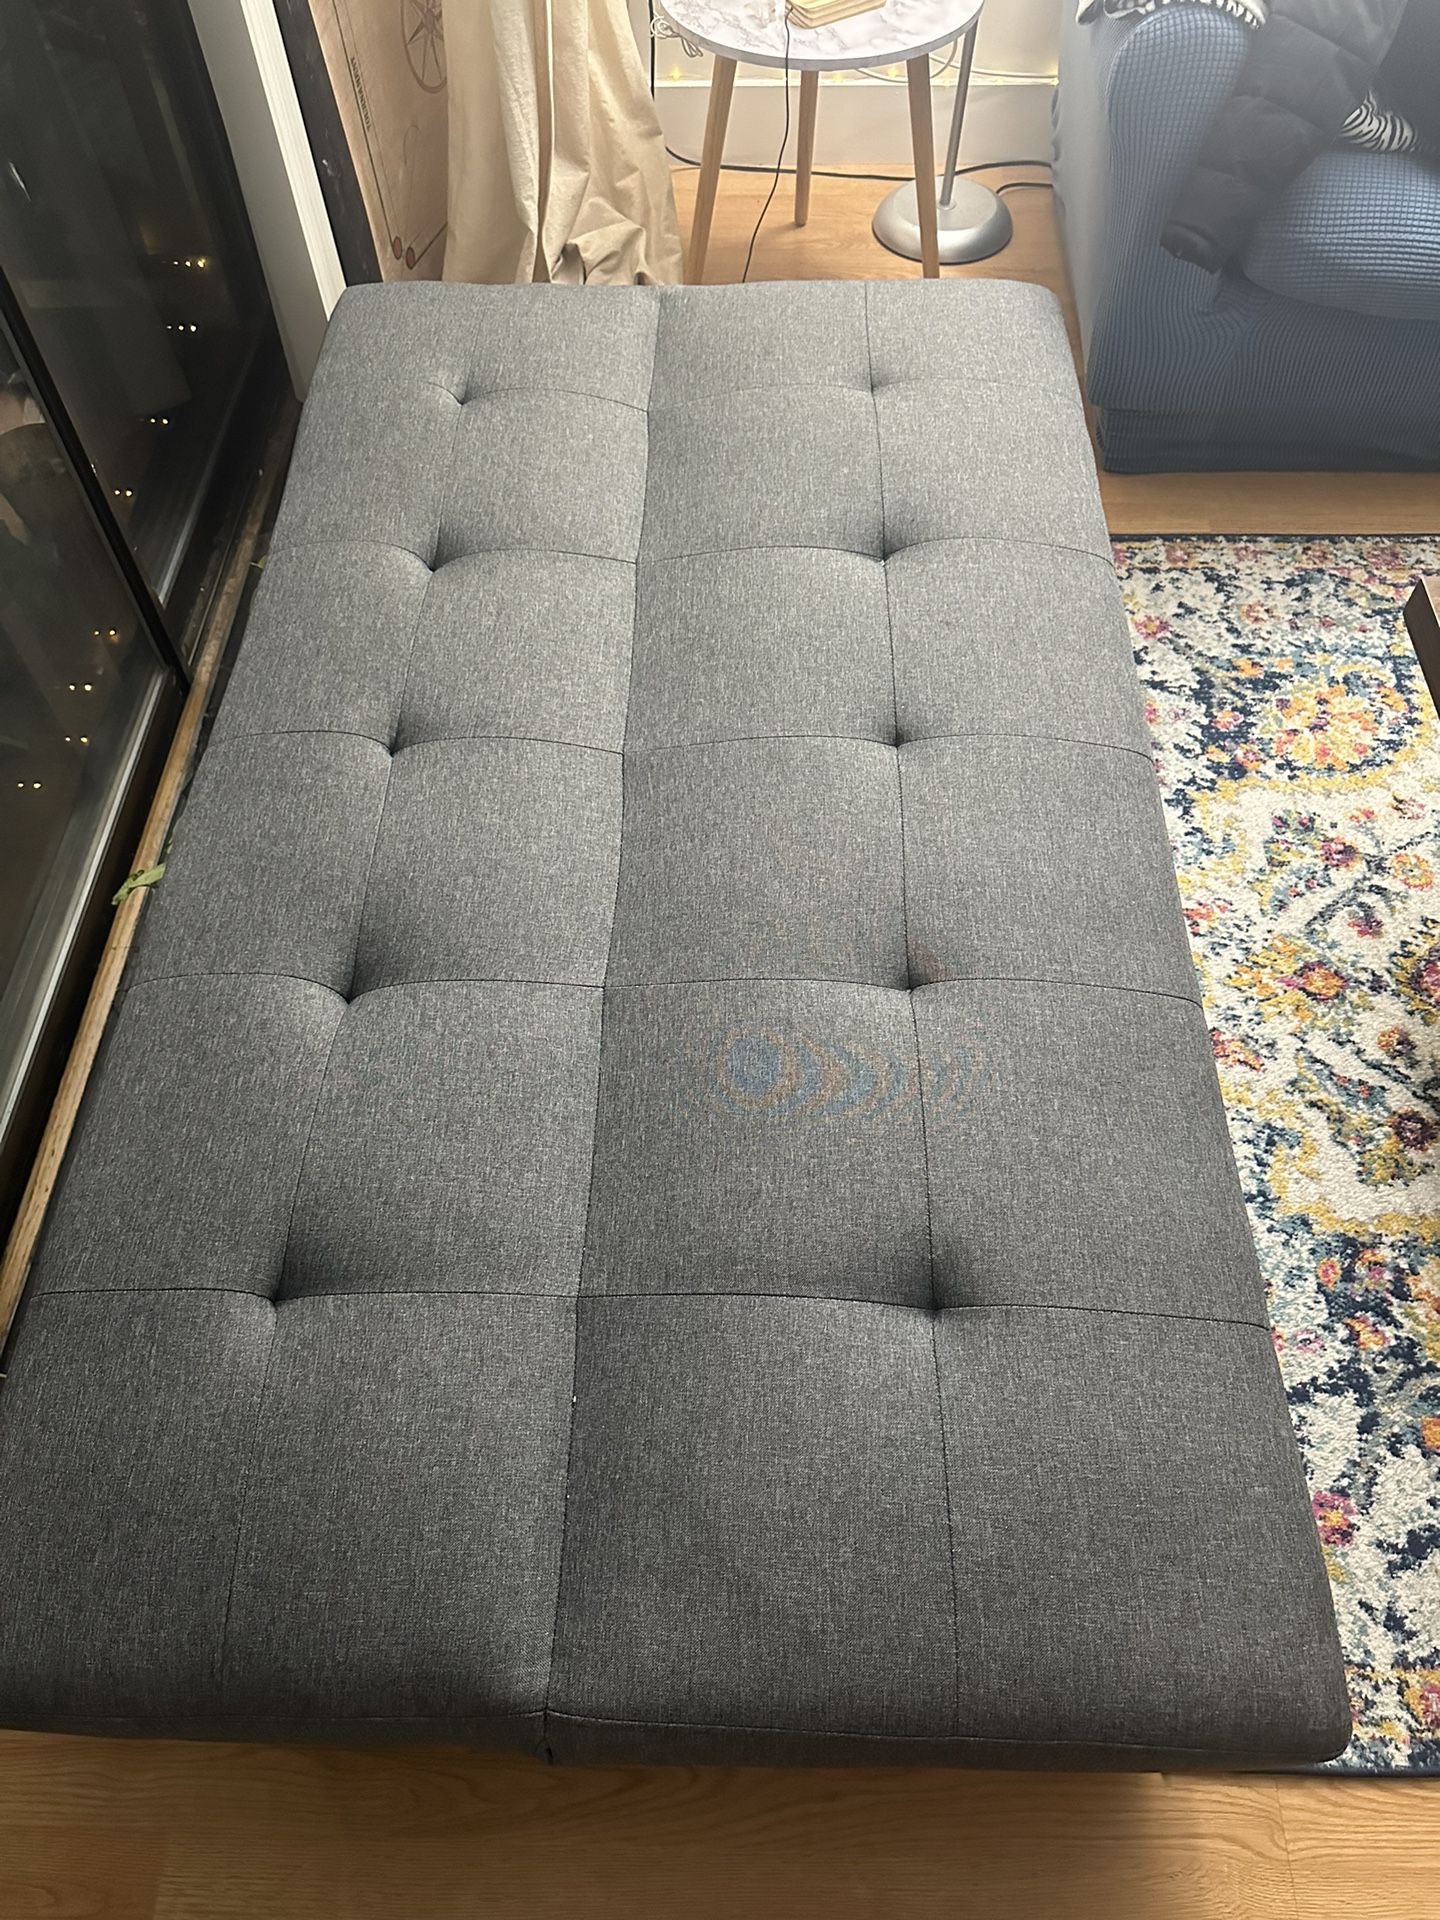 Convertible Sleeper Futon Sofa